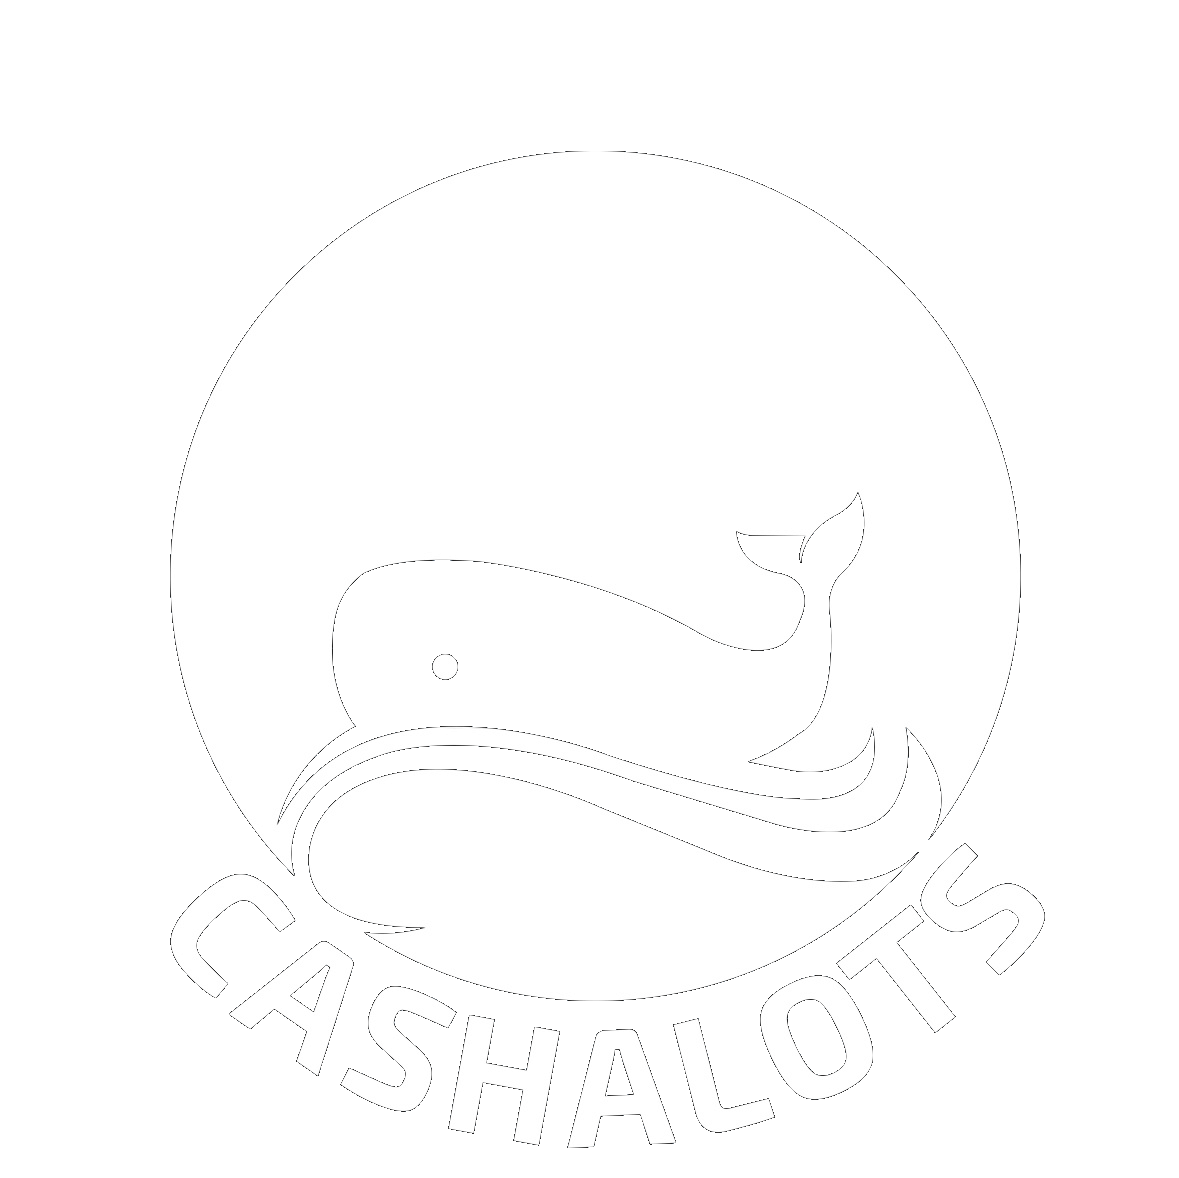 CASHALOTS